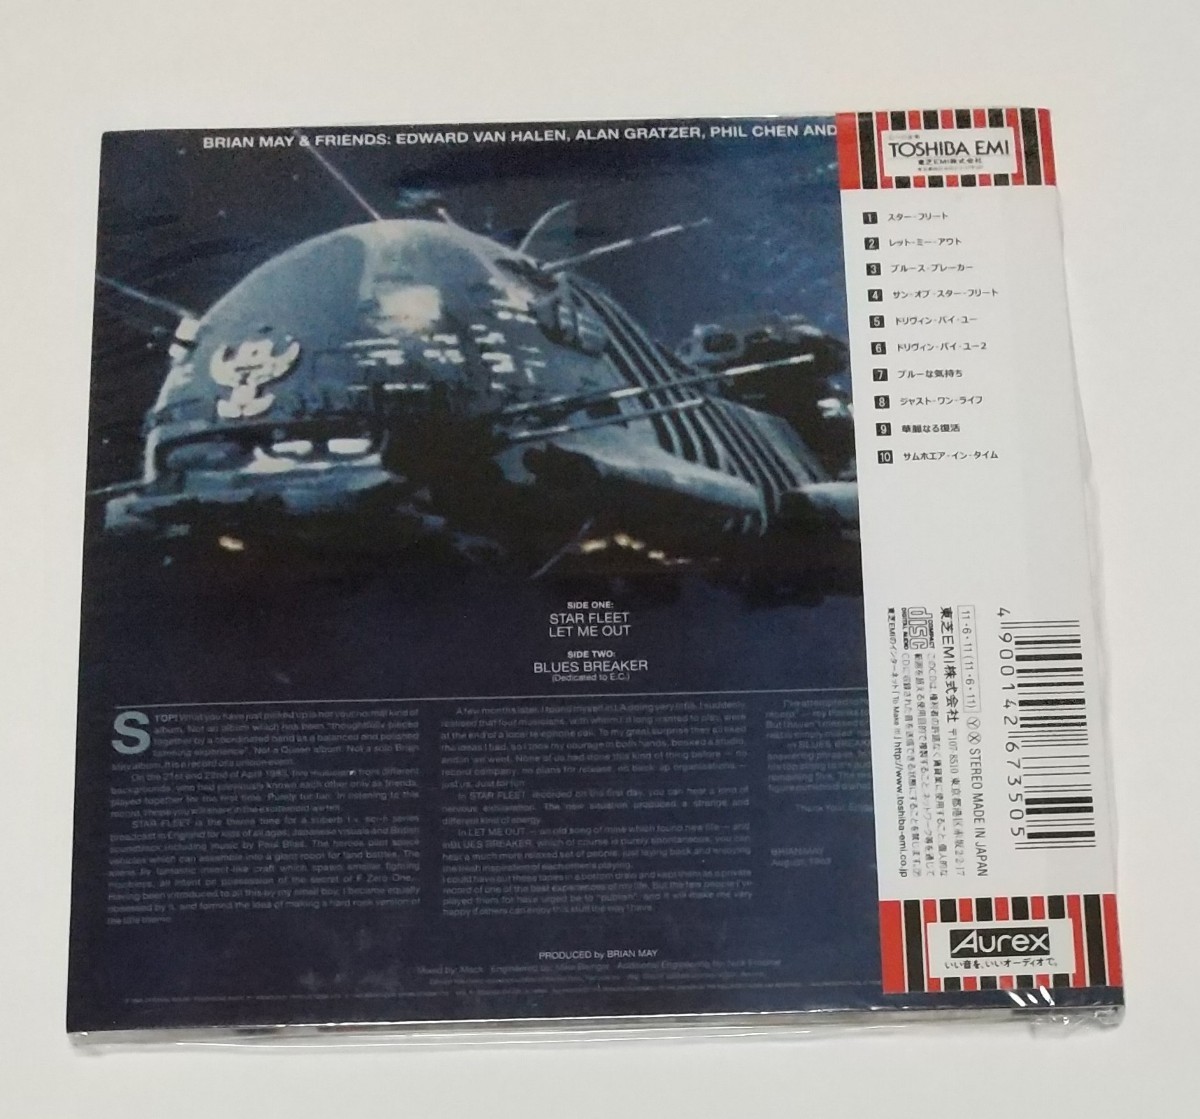 CD未開封輸入盤リプロ盤 紙ジャケ BrianMay+Friends Star Fleet Project  スター・フリート